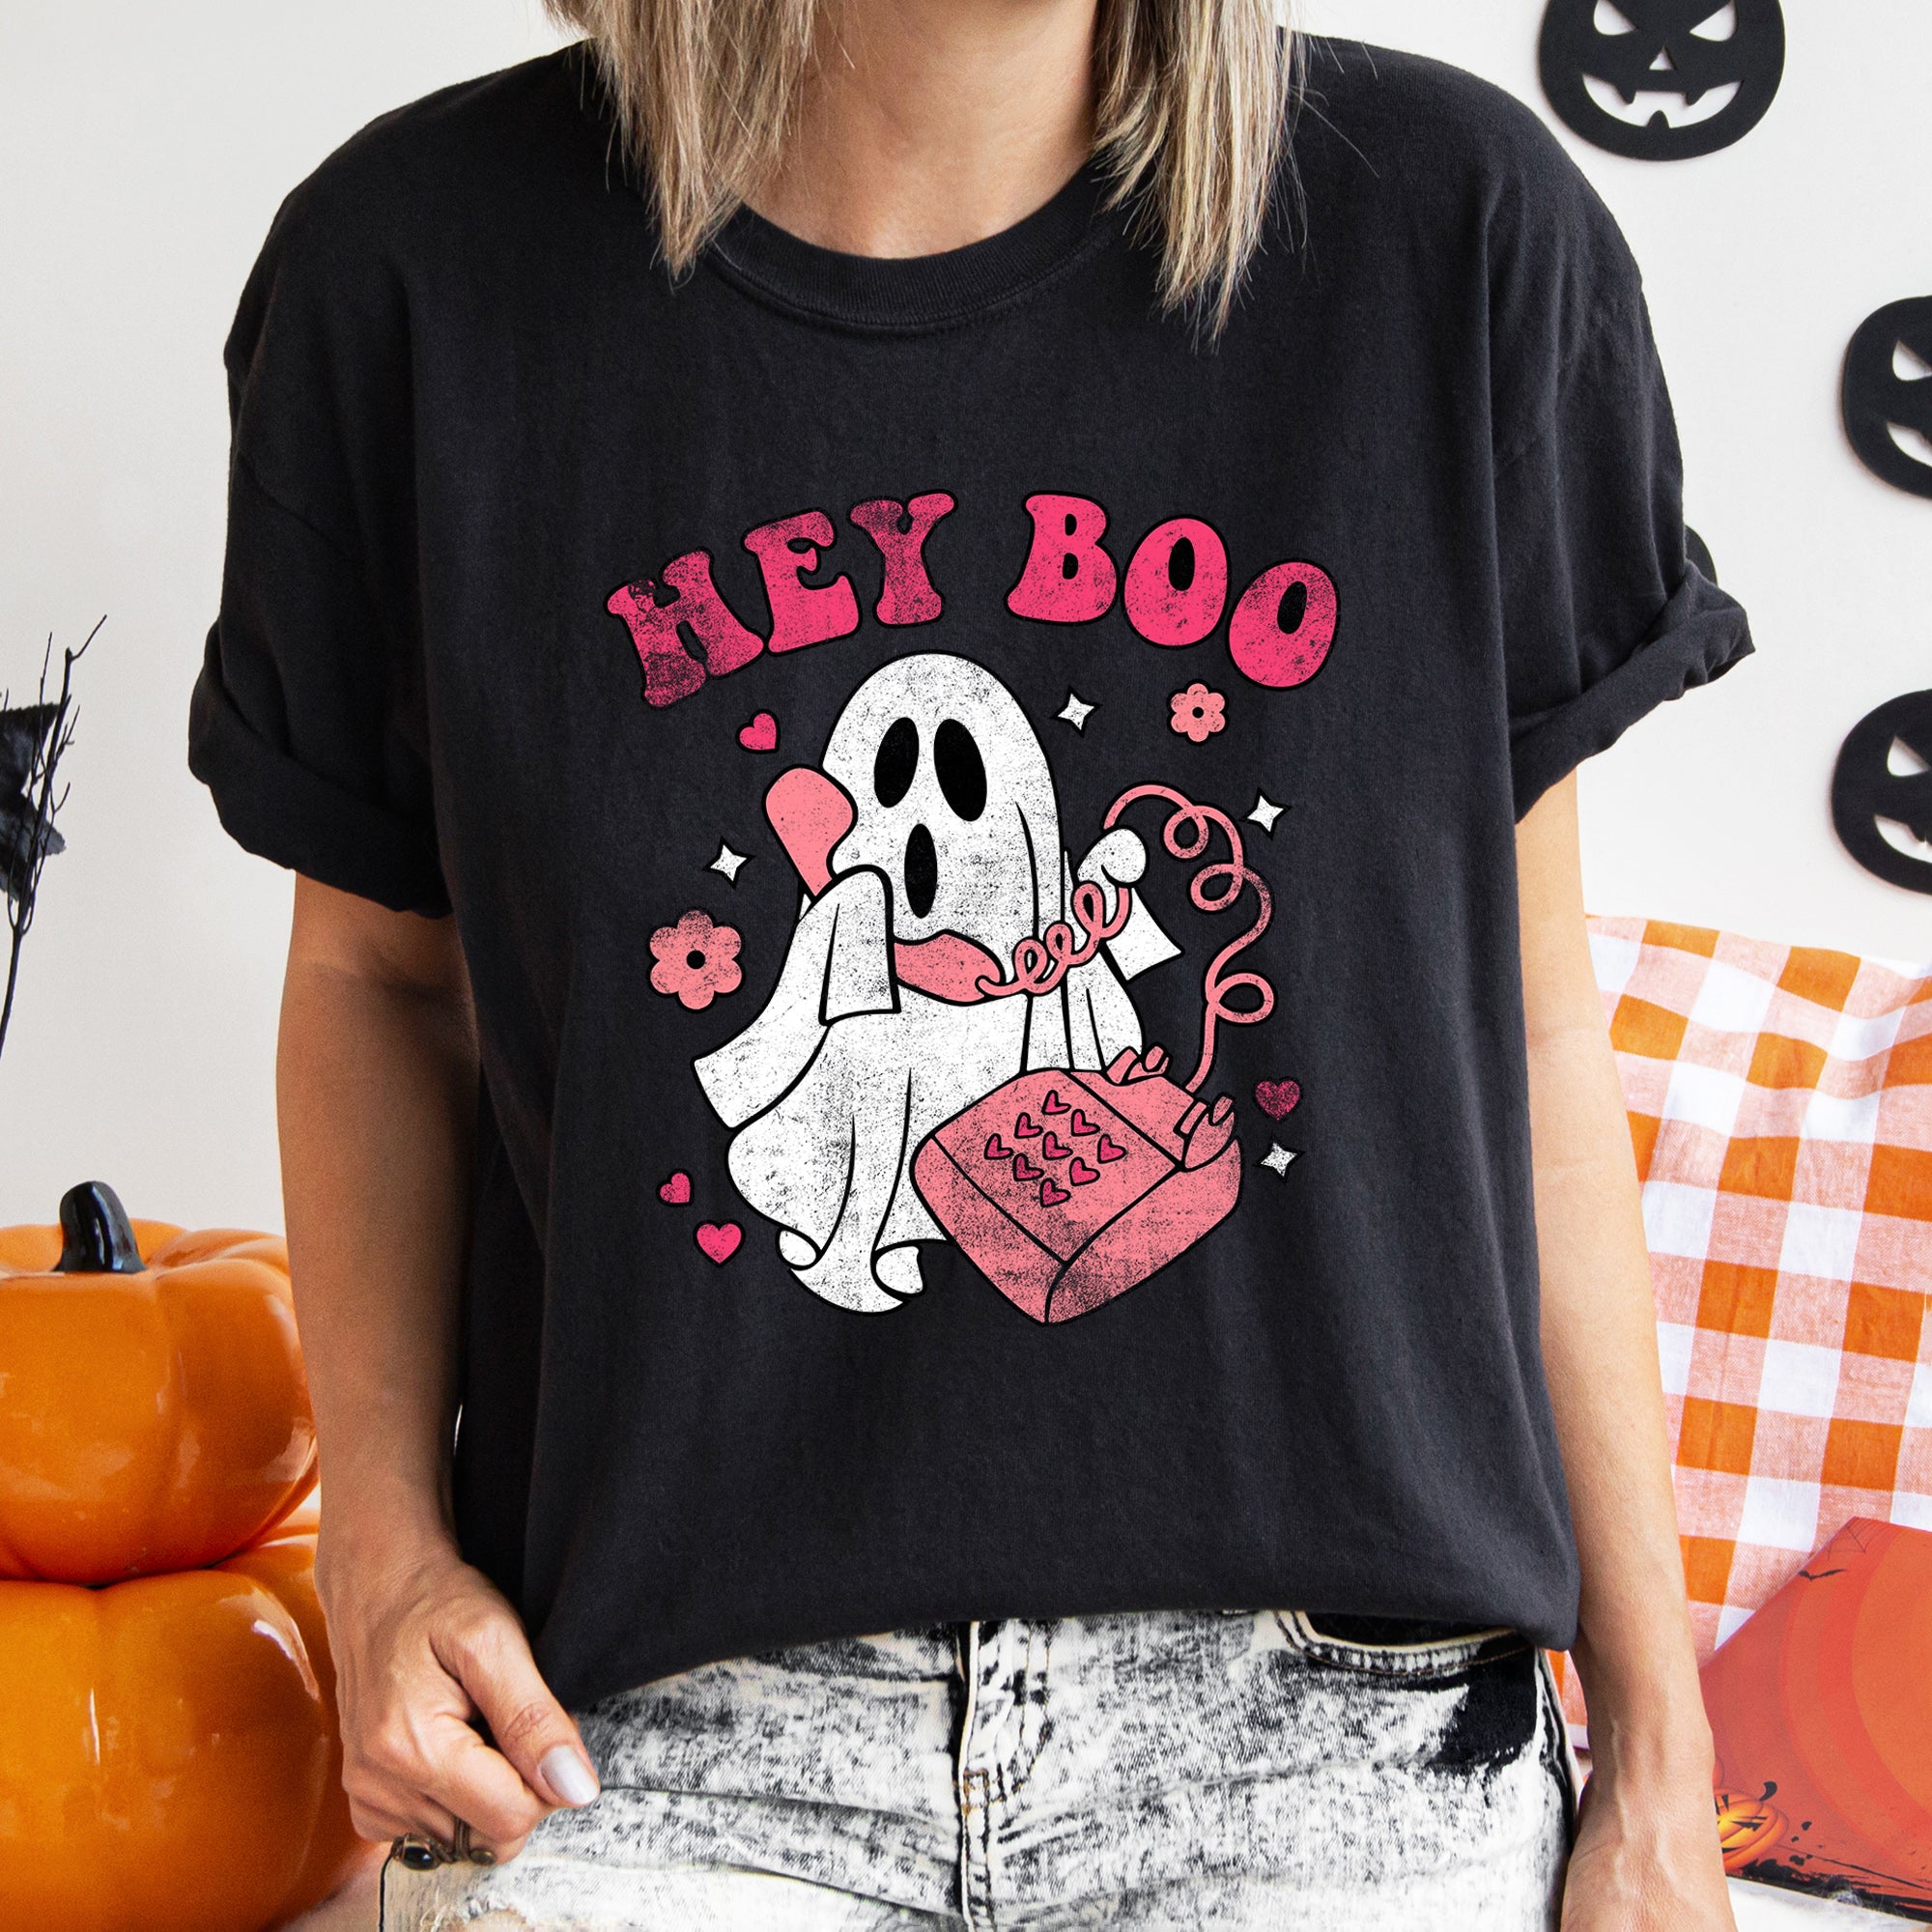 Hey Boo Retro Halloween T-shirt